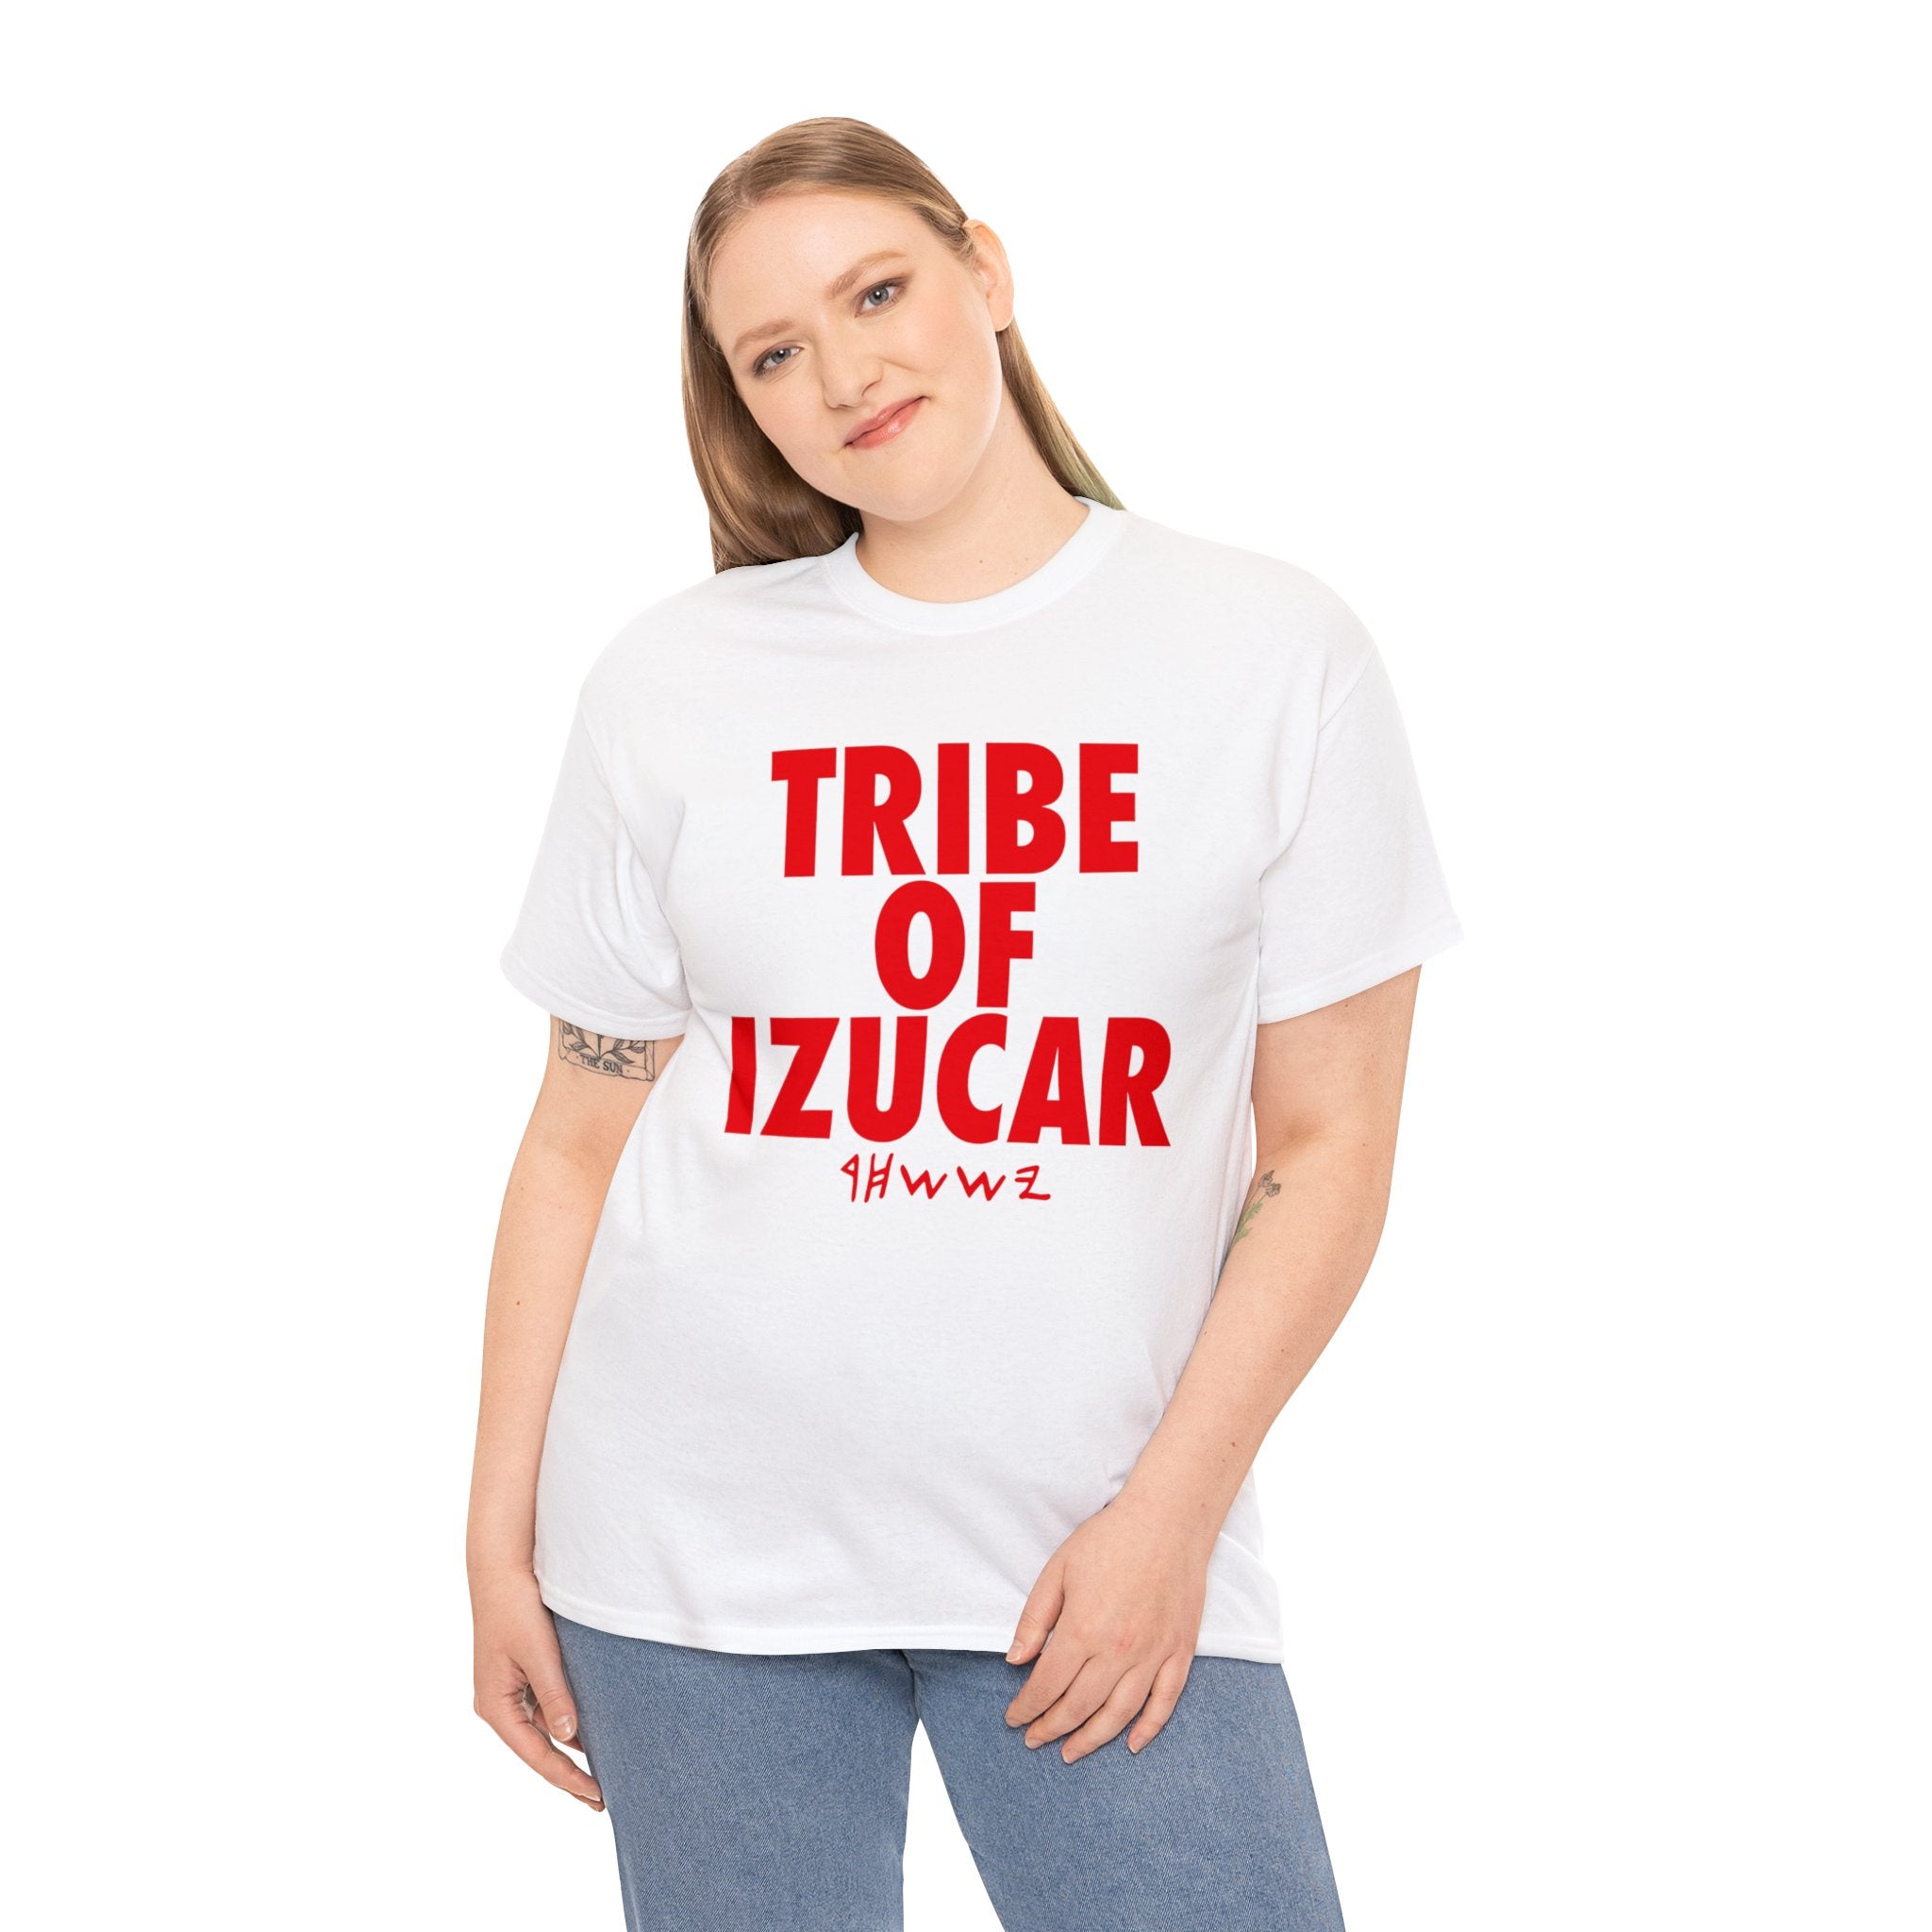 TRIBE OF IZUCAR(ISSACHAR) RED